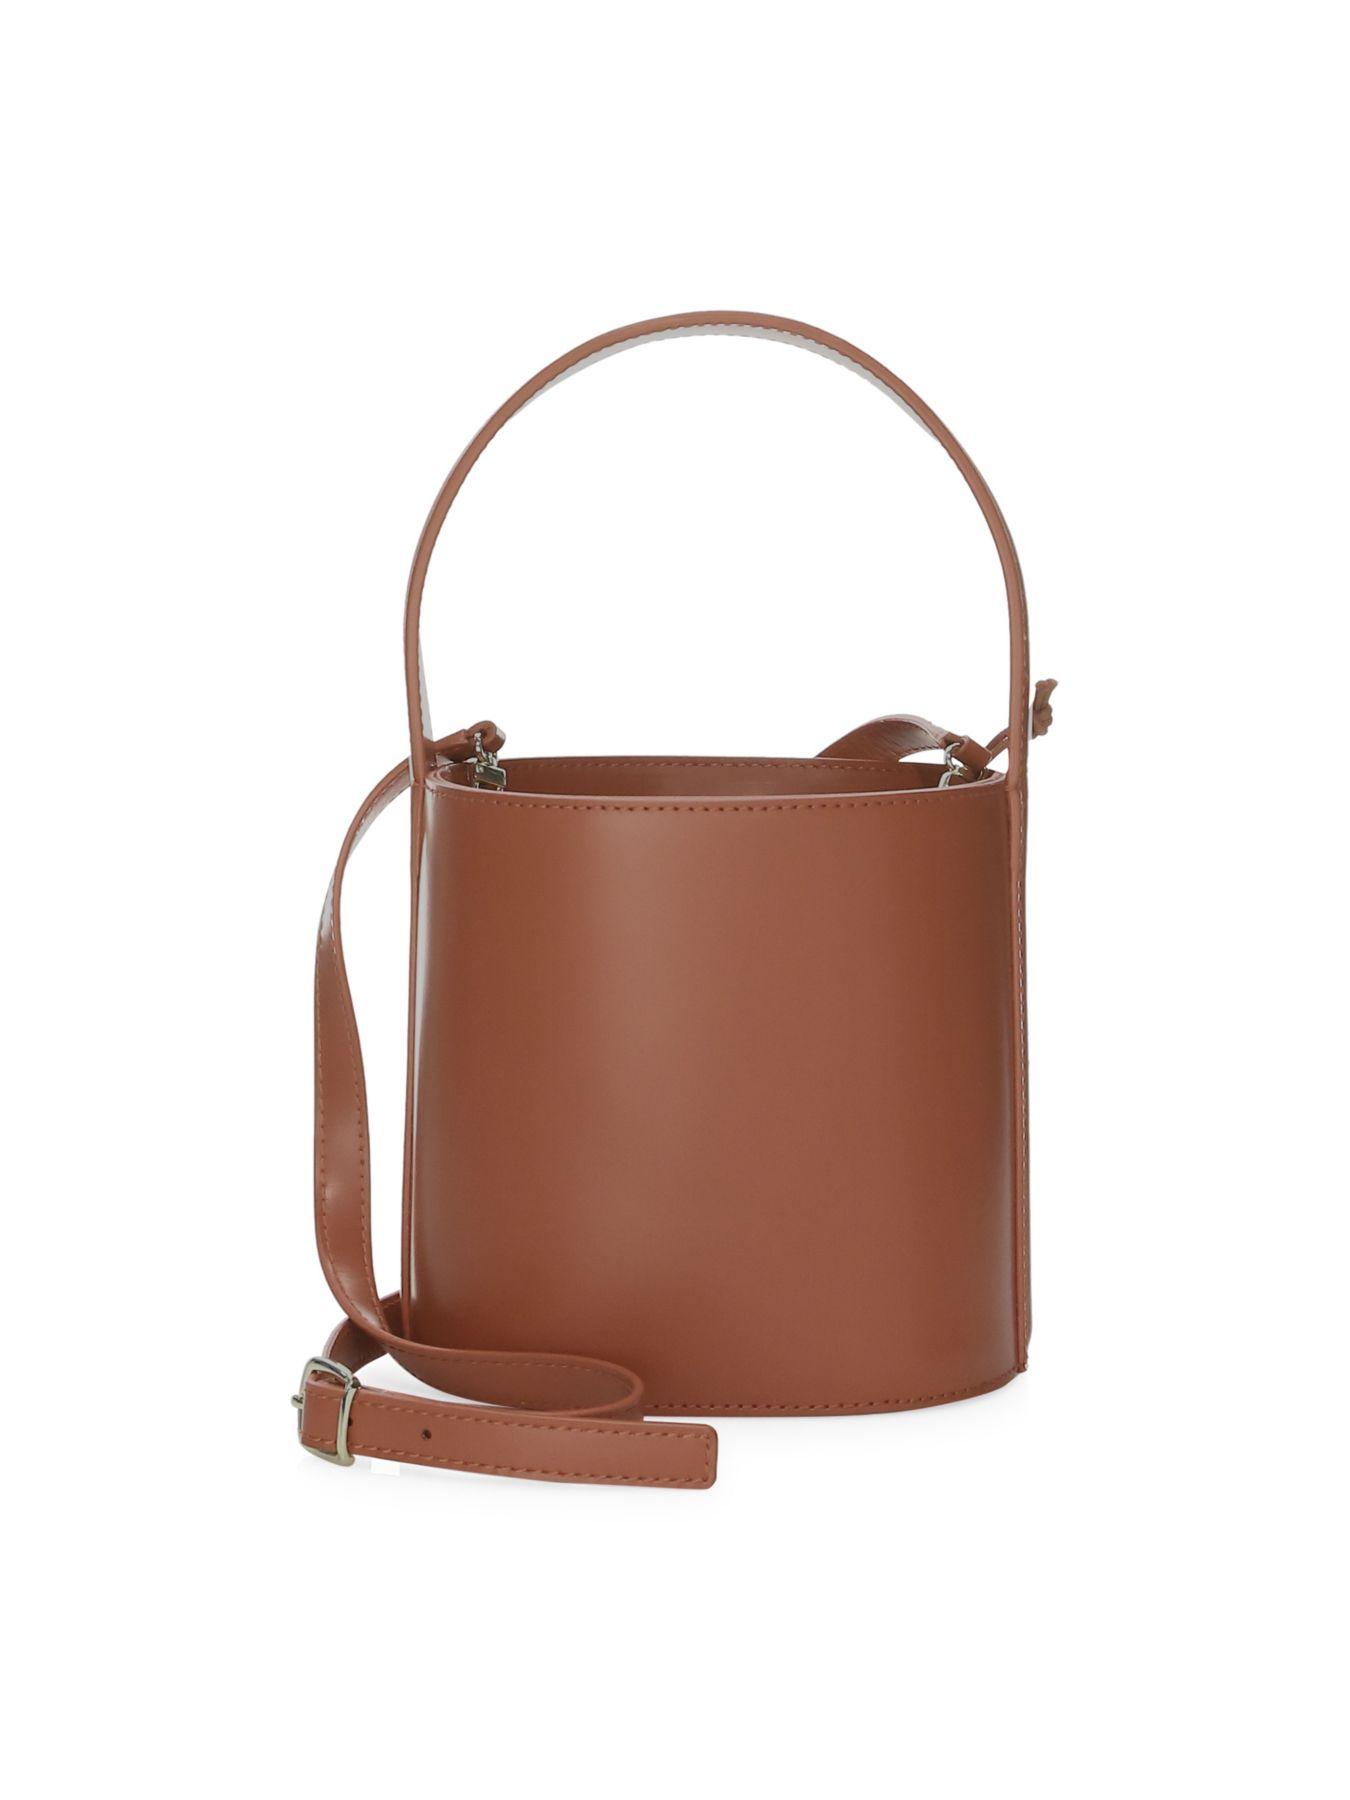 STAUD Bissett Leather Bucket Bag in Tan (Brown) - Lyst